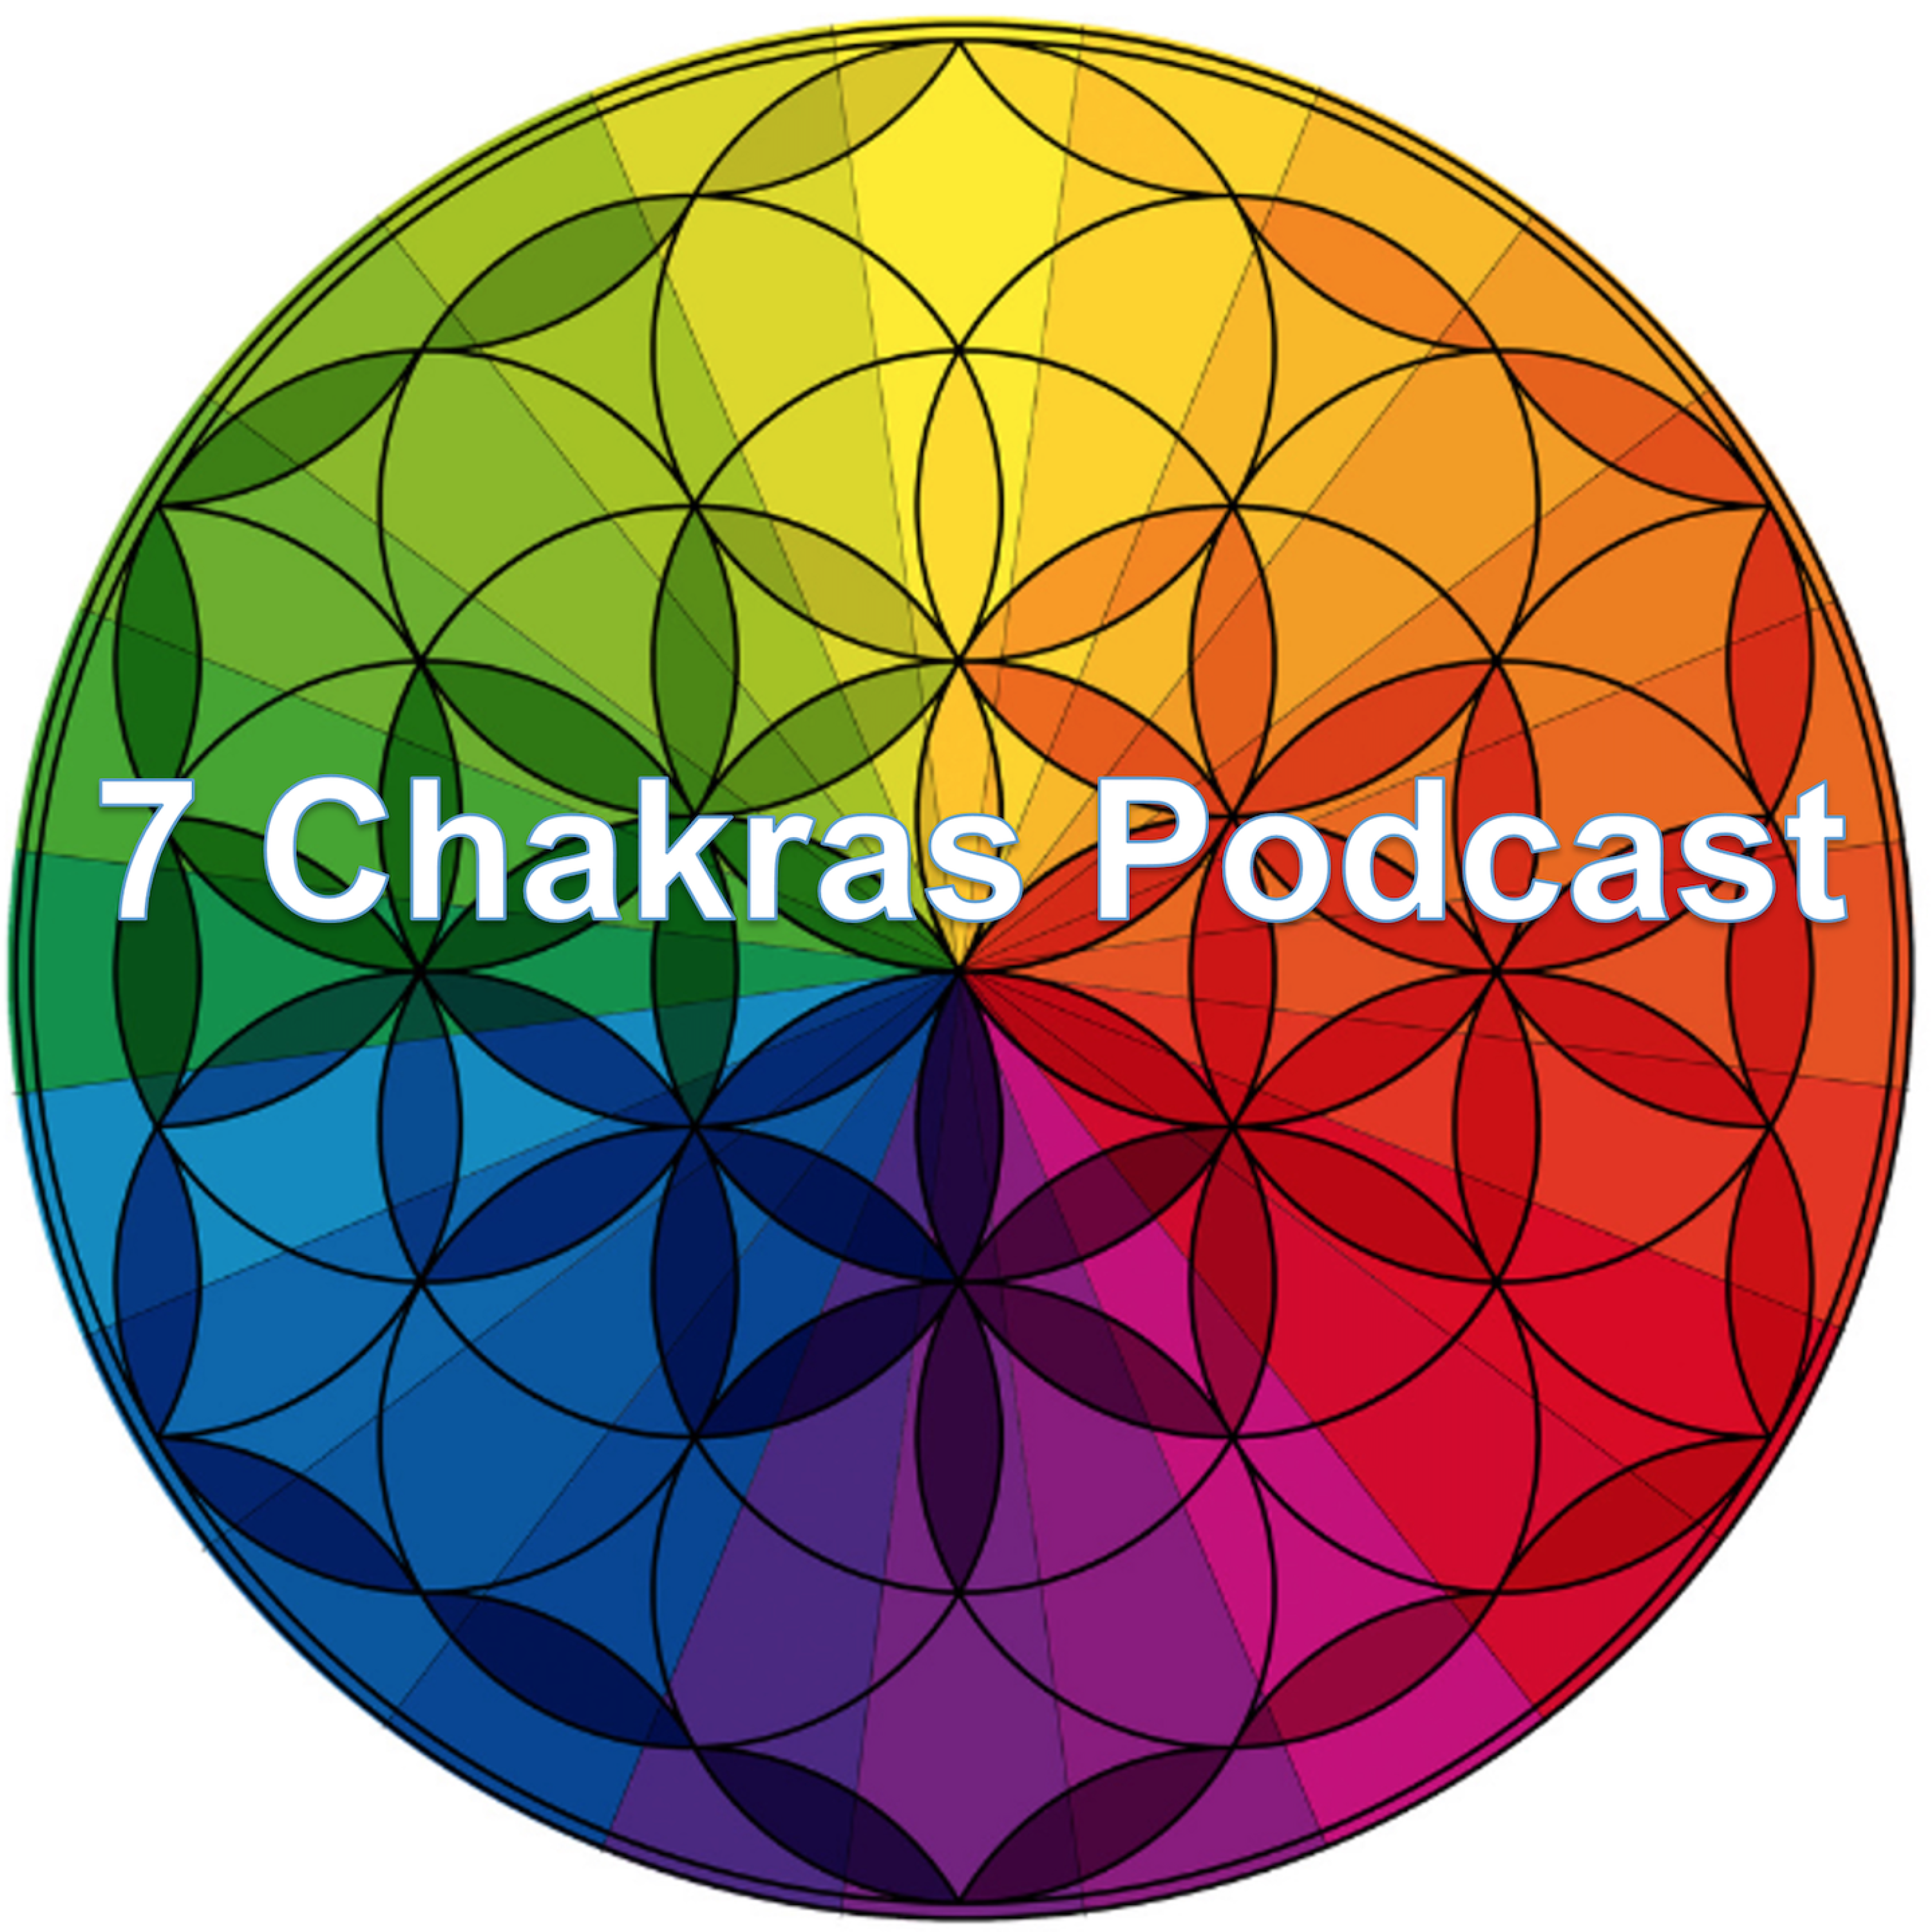 7 Chakras Podcast